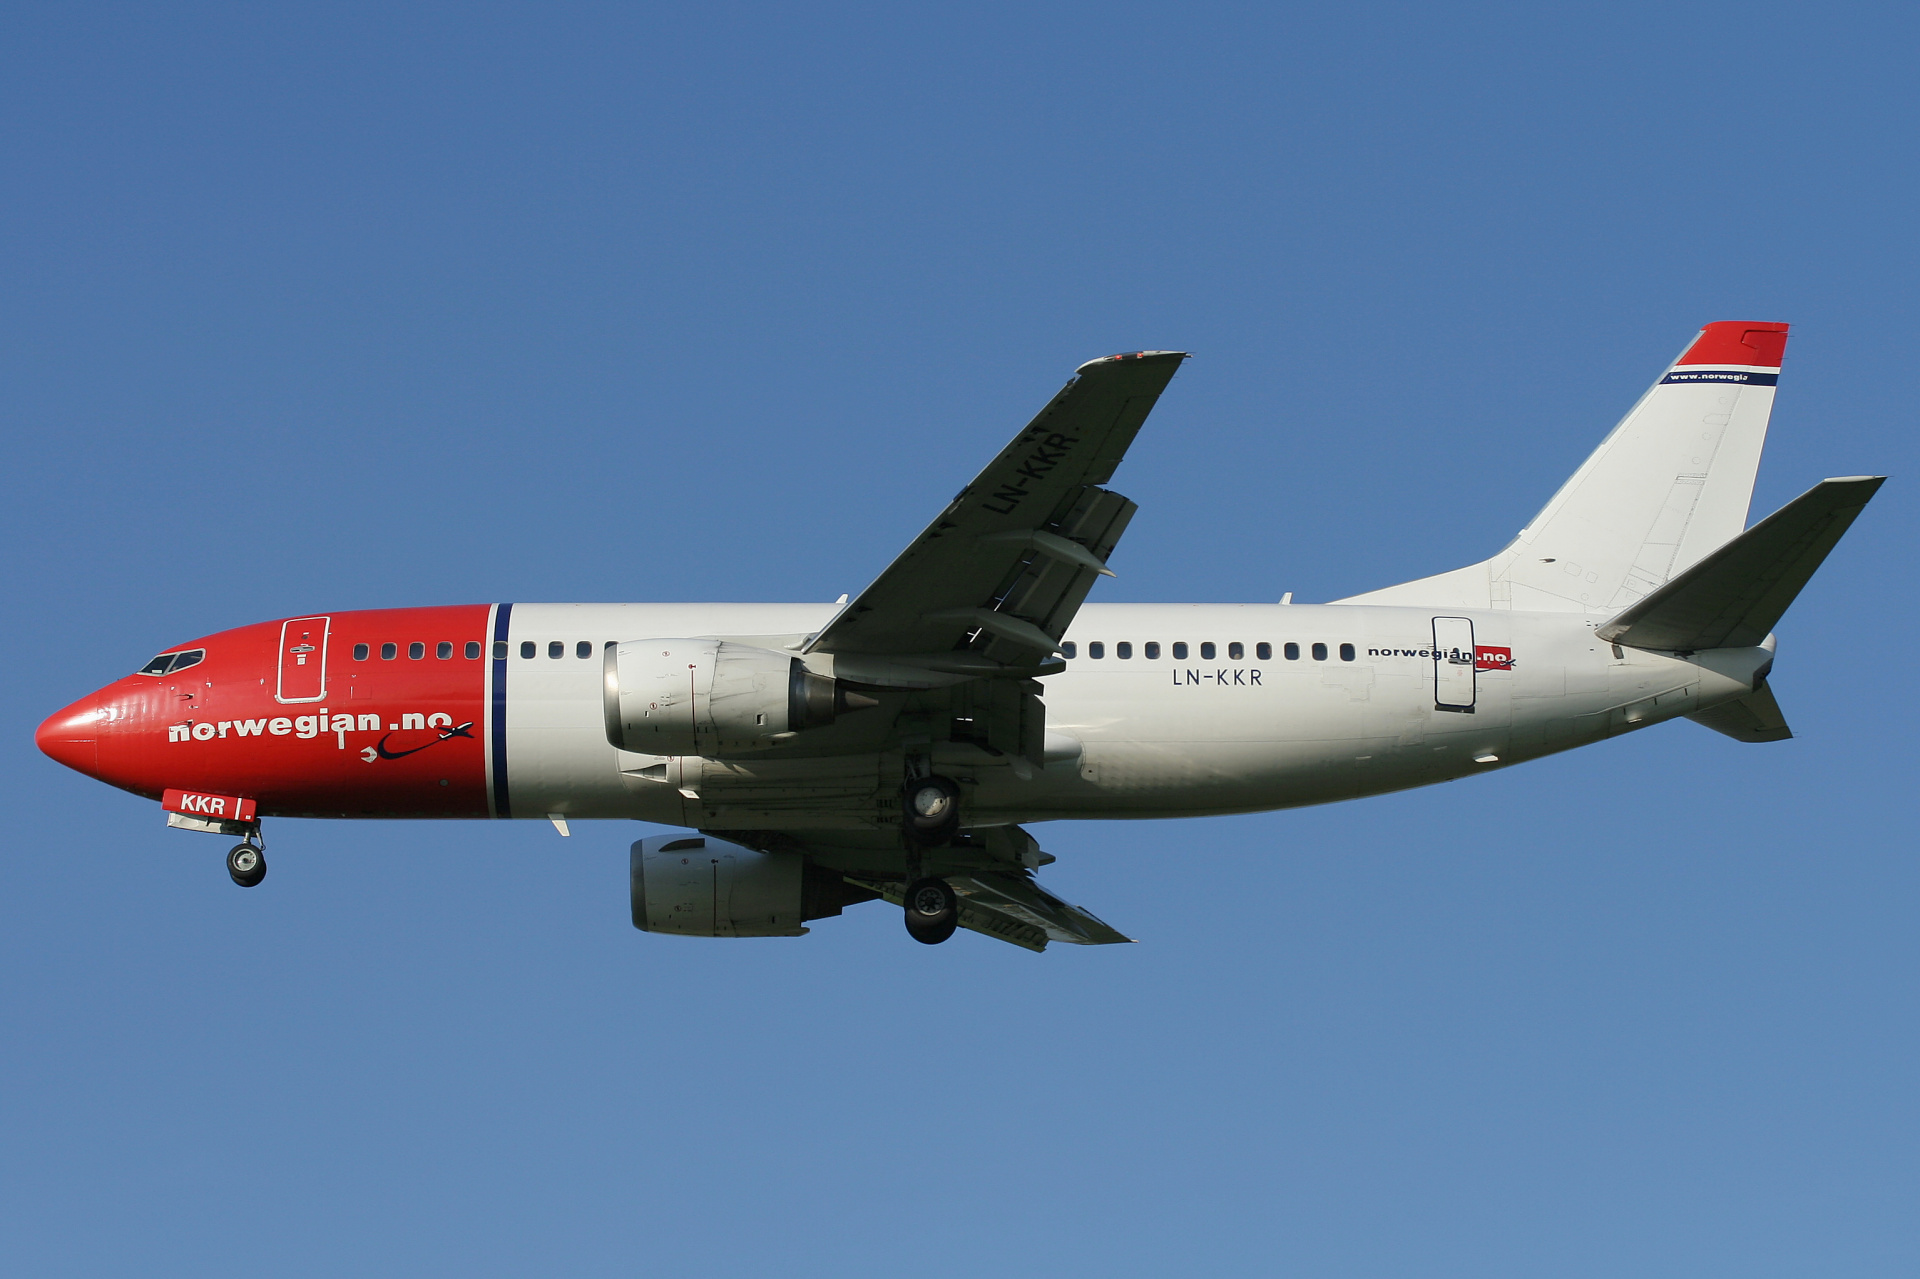 LN-KKR (Aircraft » EPWA Spotting » Boeing 737-300 » Norwegian Air Shuttle)